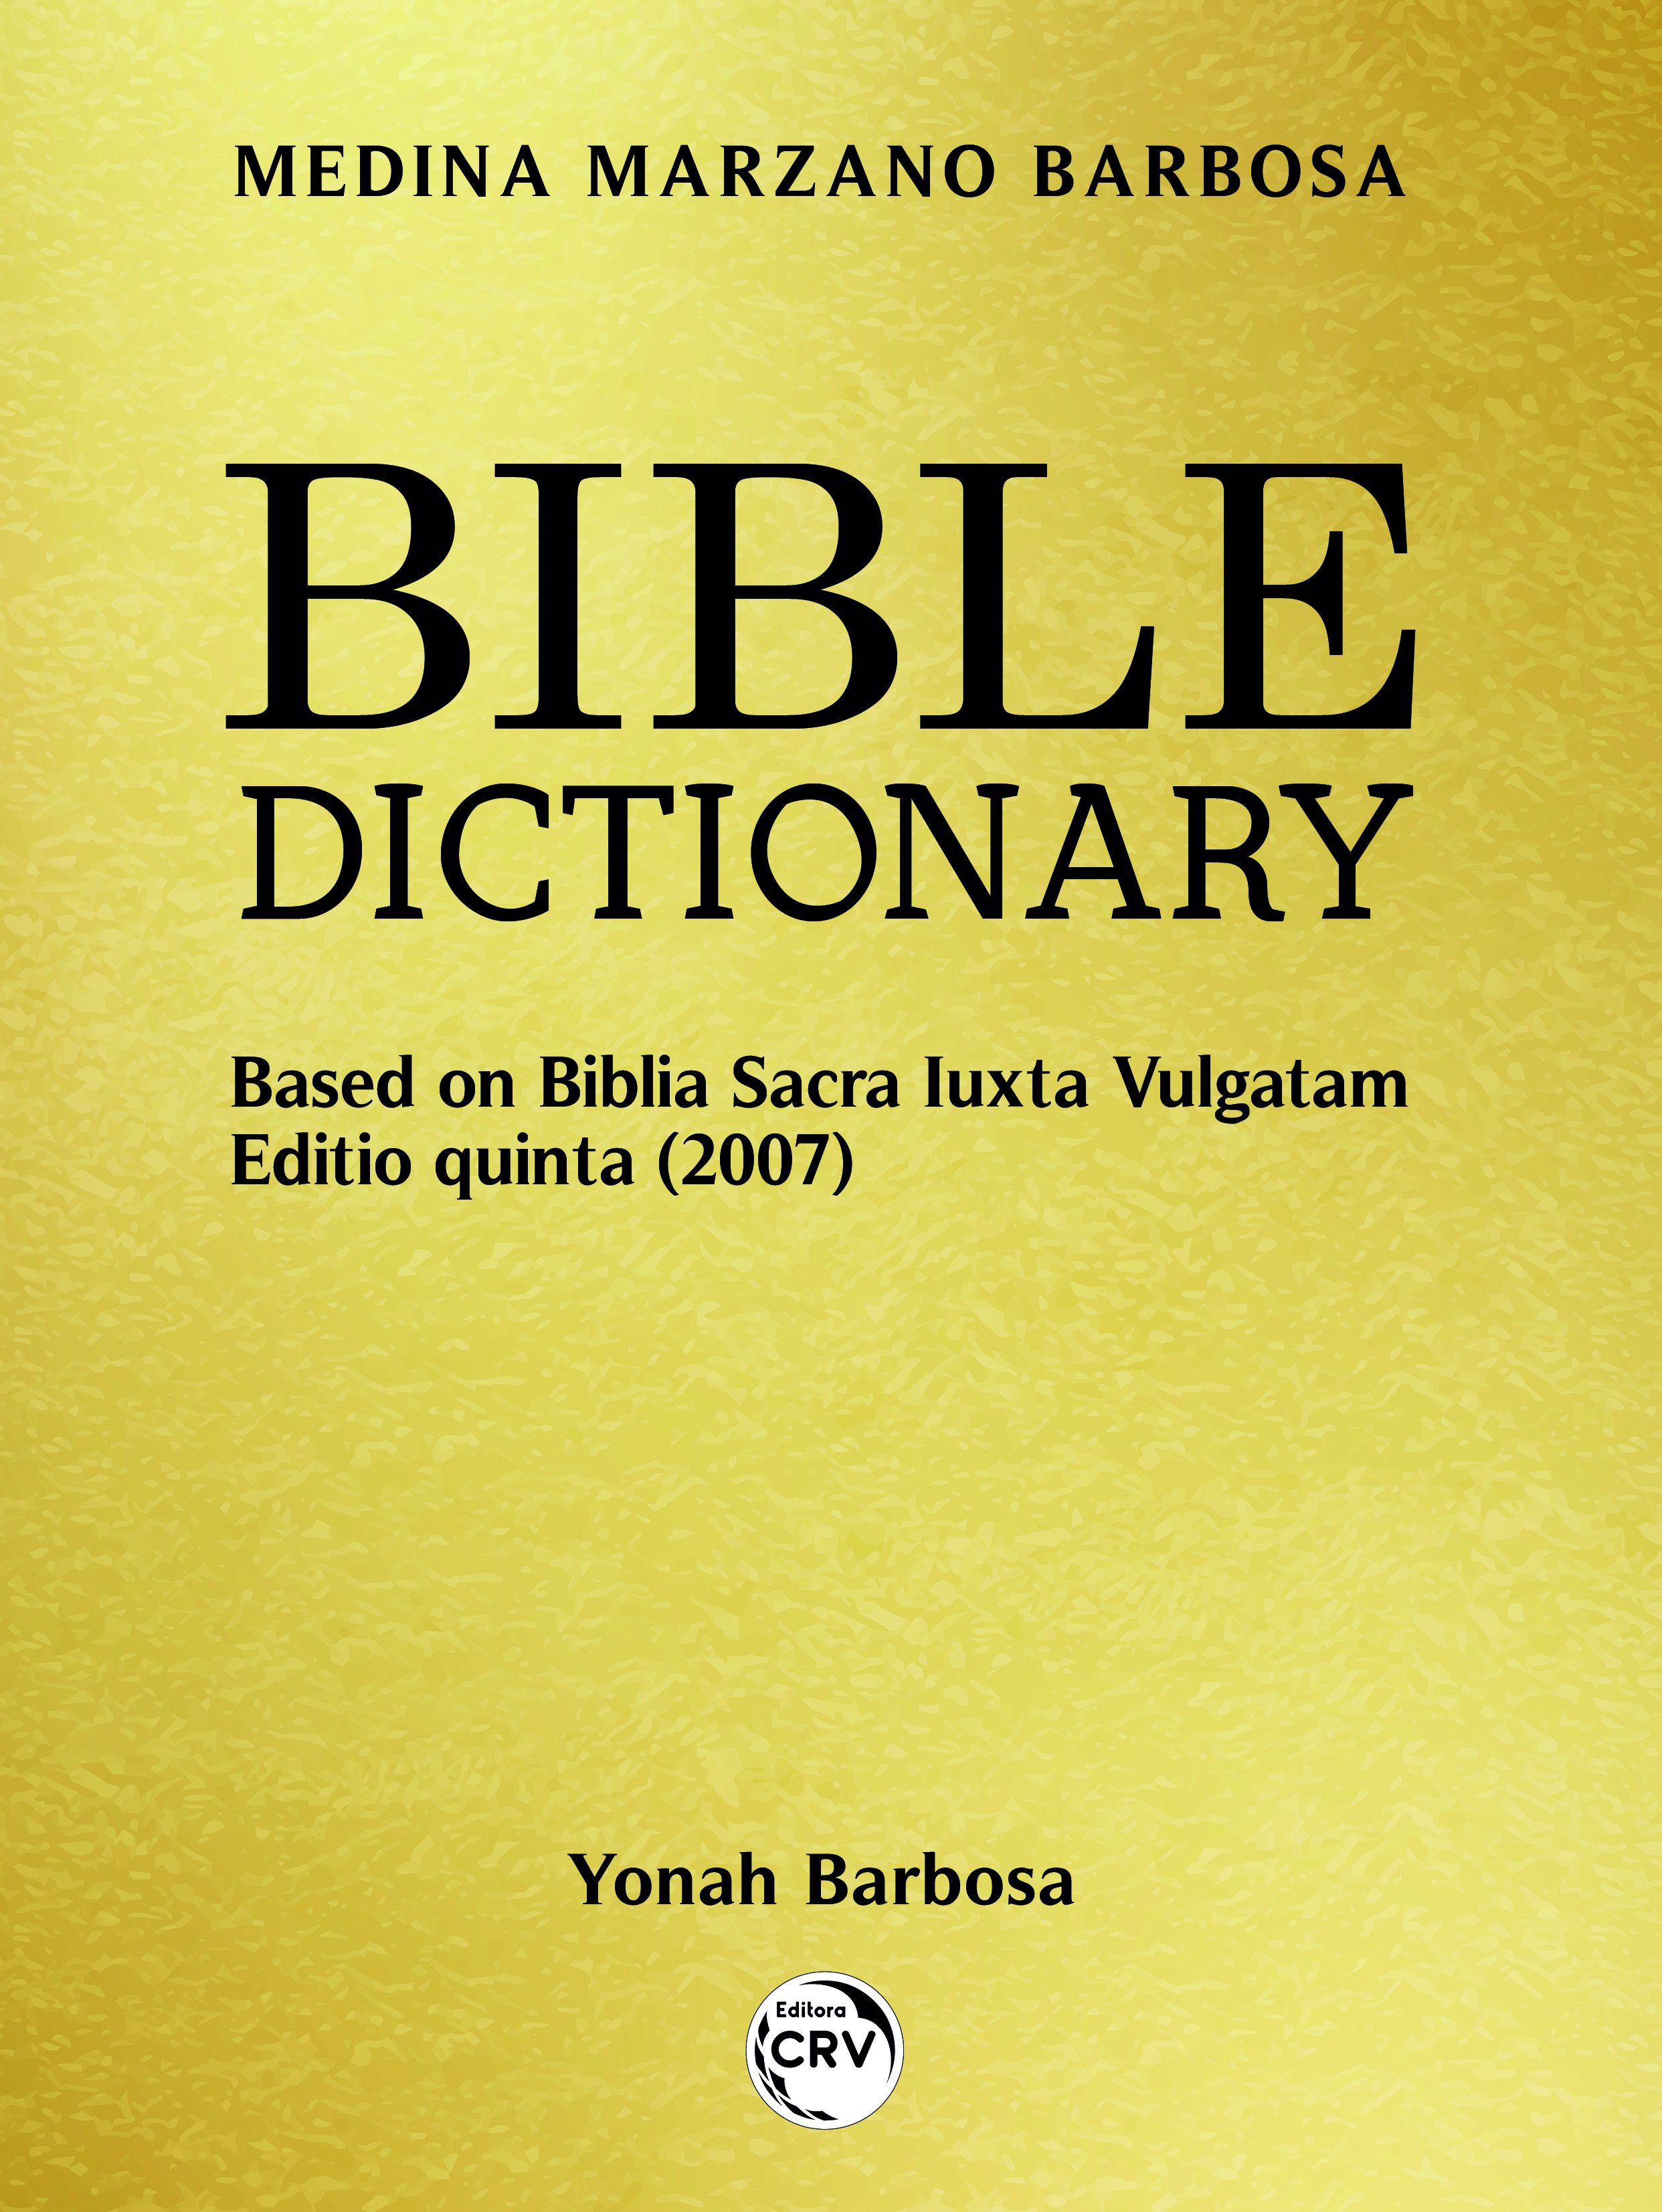 Capa do livro: BIBLE DICTIONARY:<BR> Based on Biblia Sacra luxta vulgatam Editio quinta (2007)